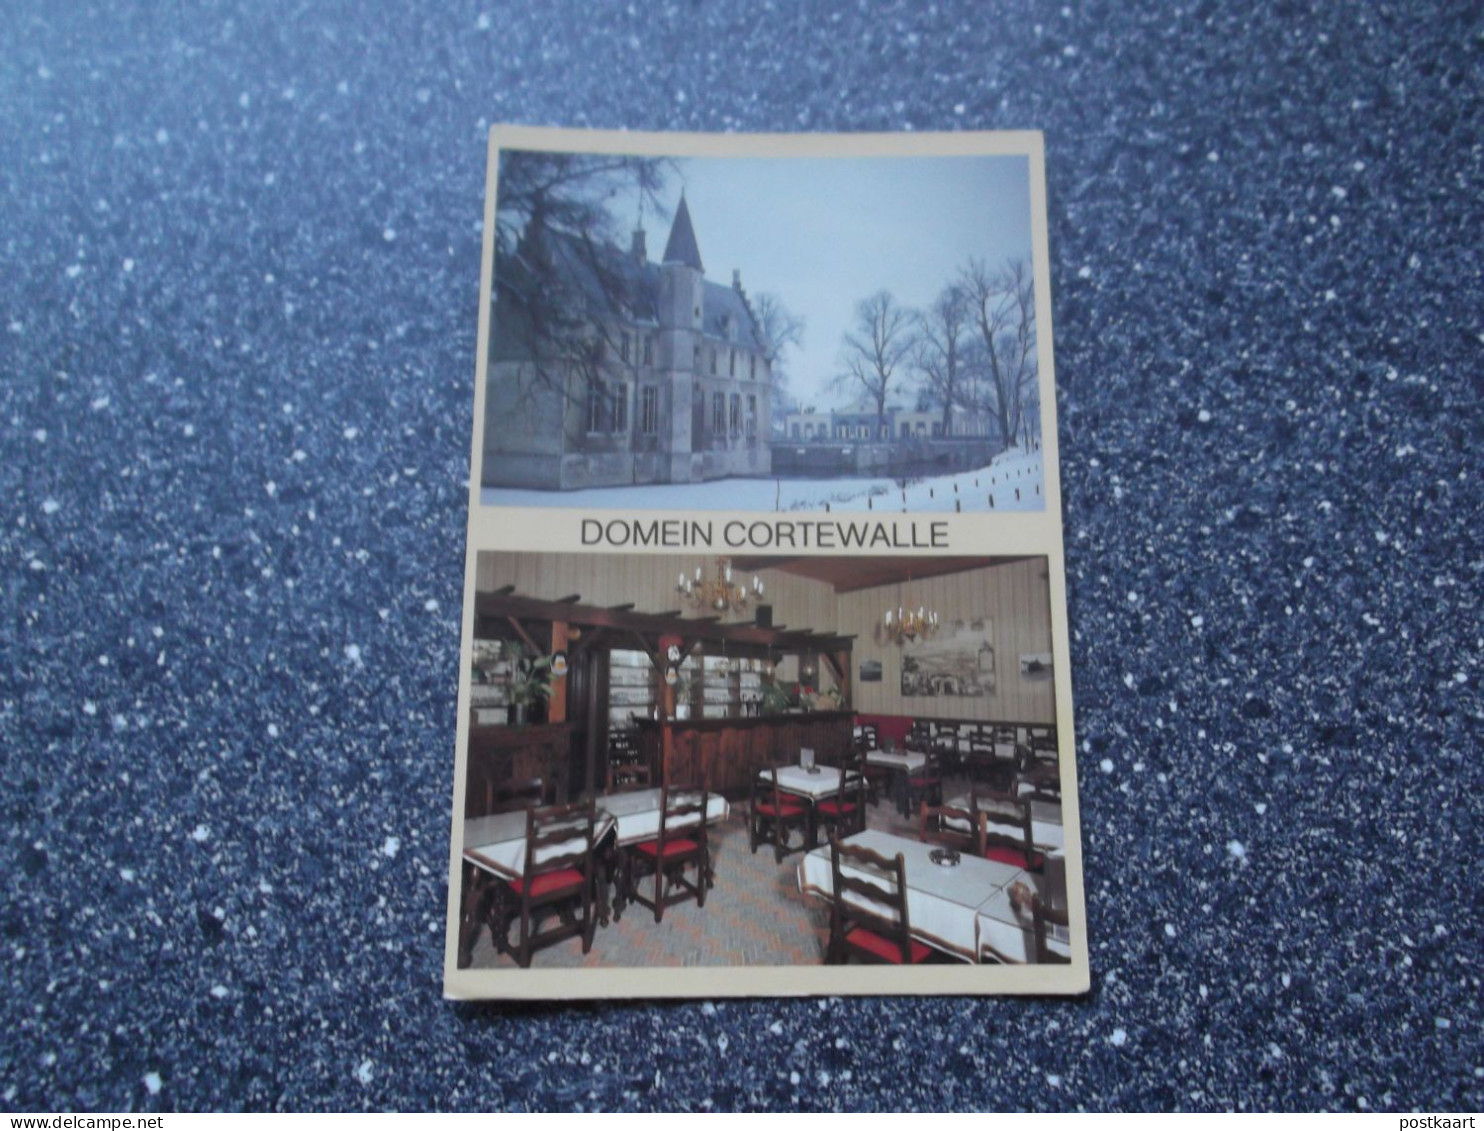 BEVEREN-WAAS: Cafétaria - Restaurant "Domein Cortewalle" - Kloosterstraat 86 - Beveren-Waas